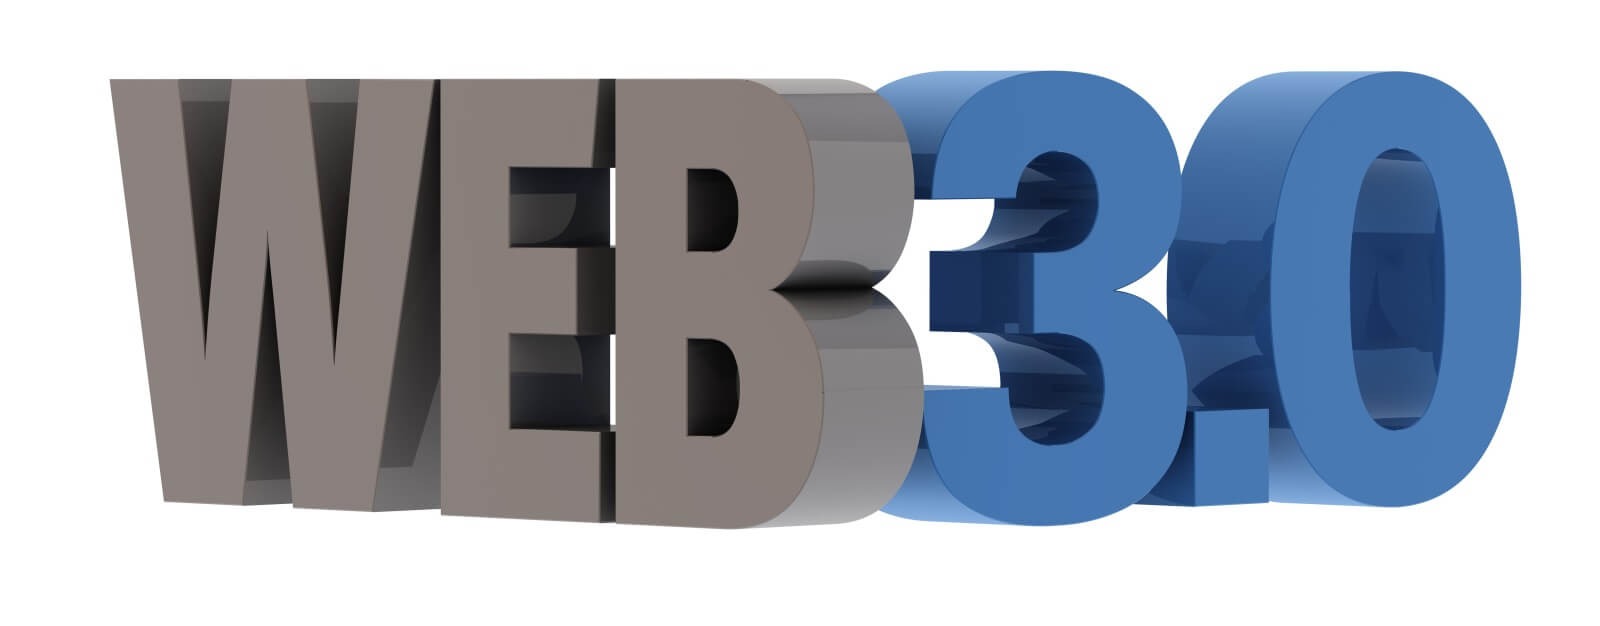 0 3.00. Web3. Веб 3.0. Web3 картинка. Web3 логотип.